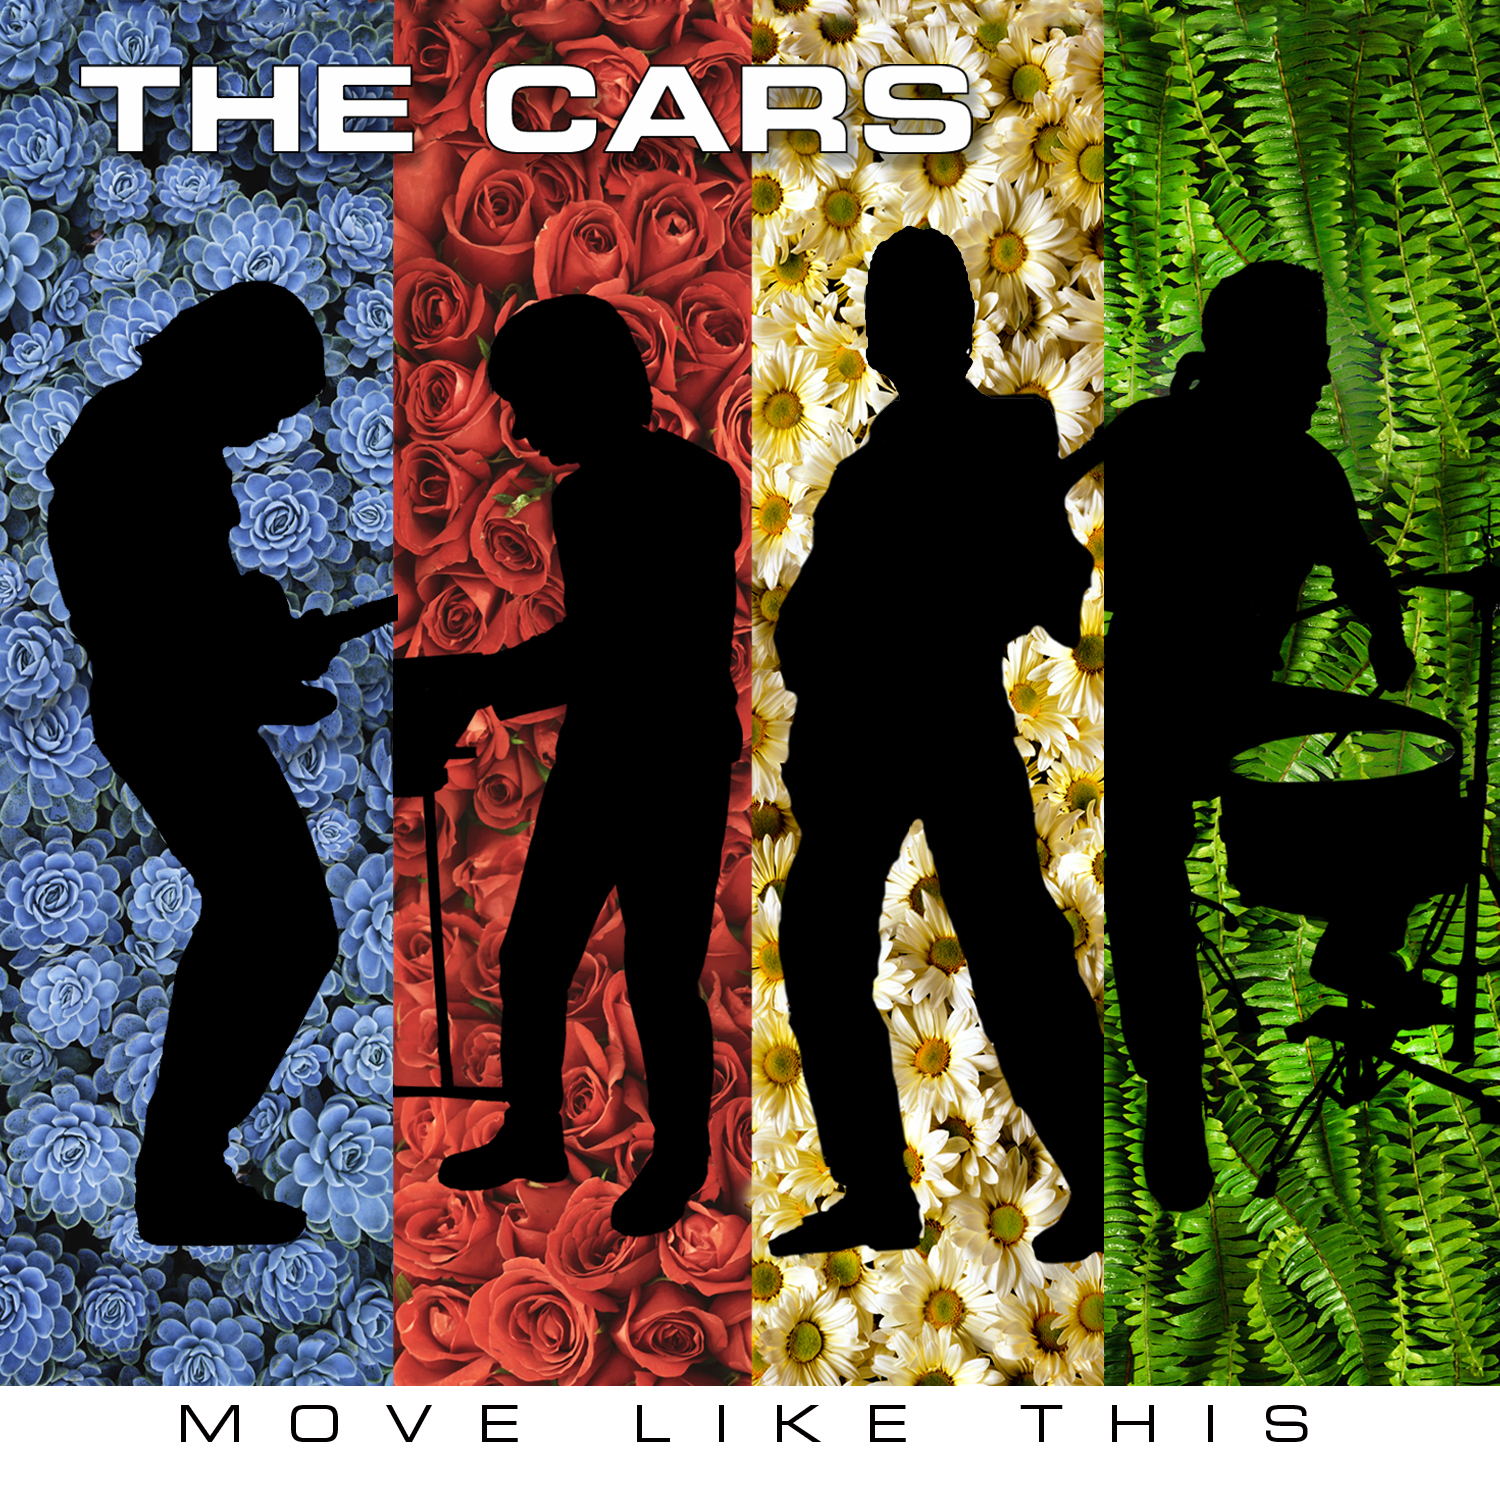 Parecidos Razonables - Página 14 The-cars-move-like-this-cover-art-hi